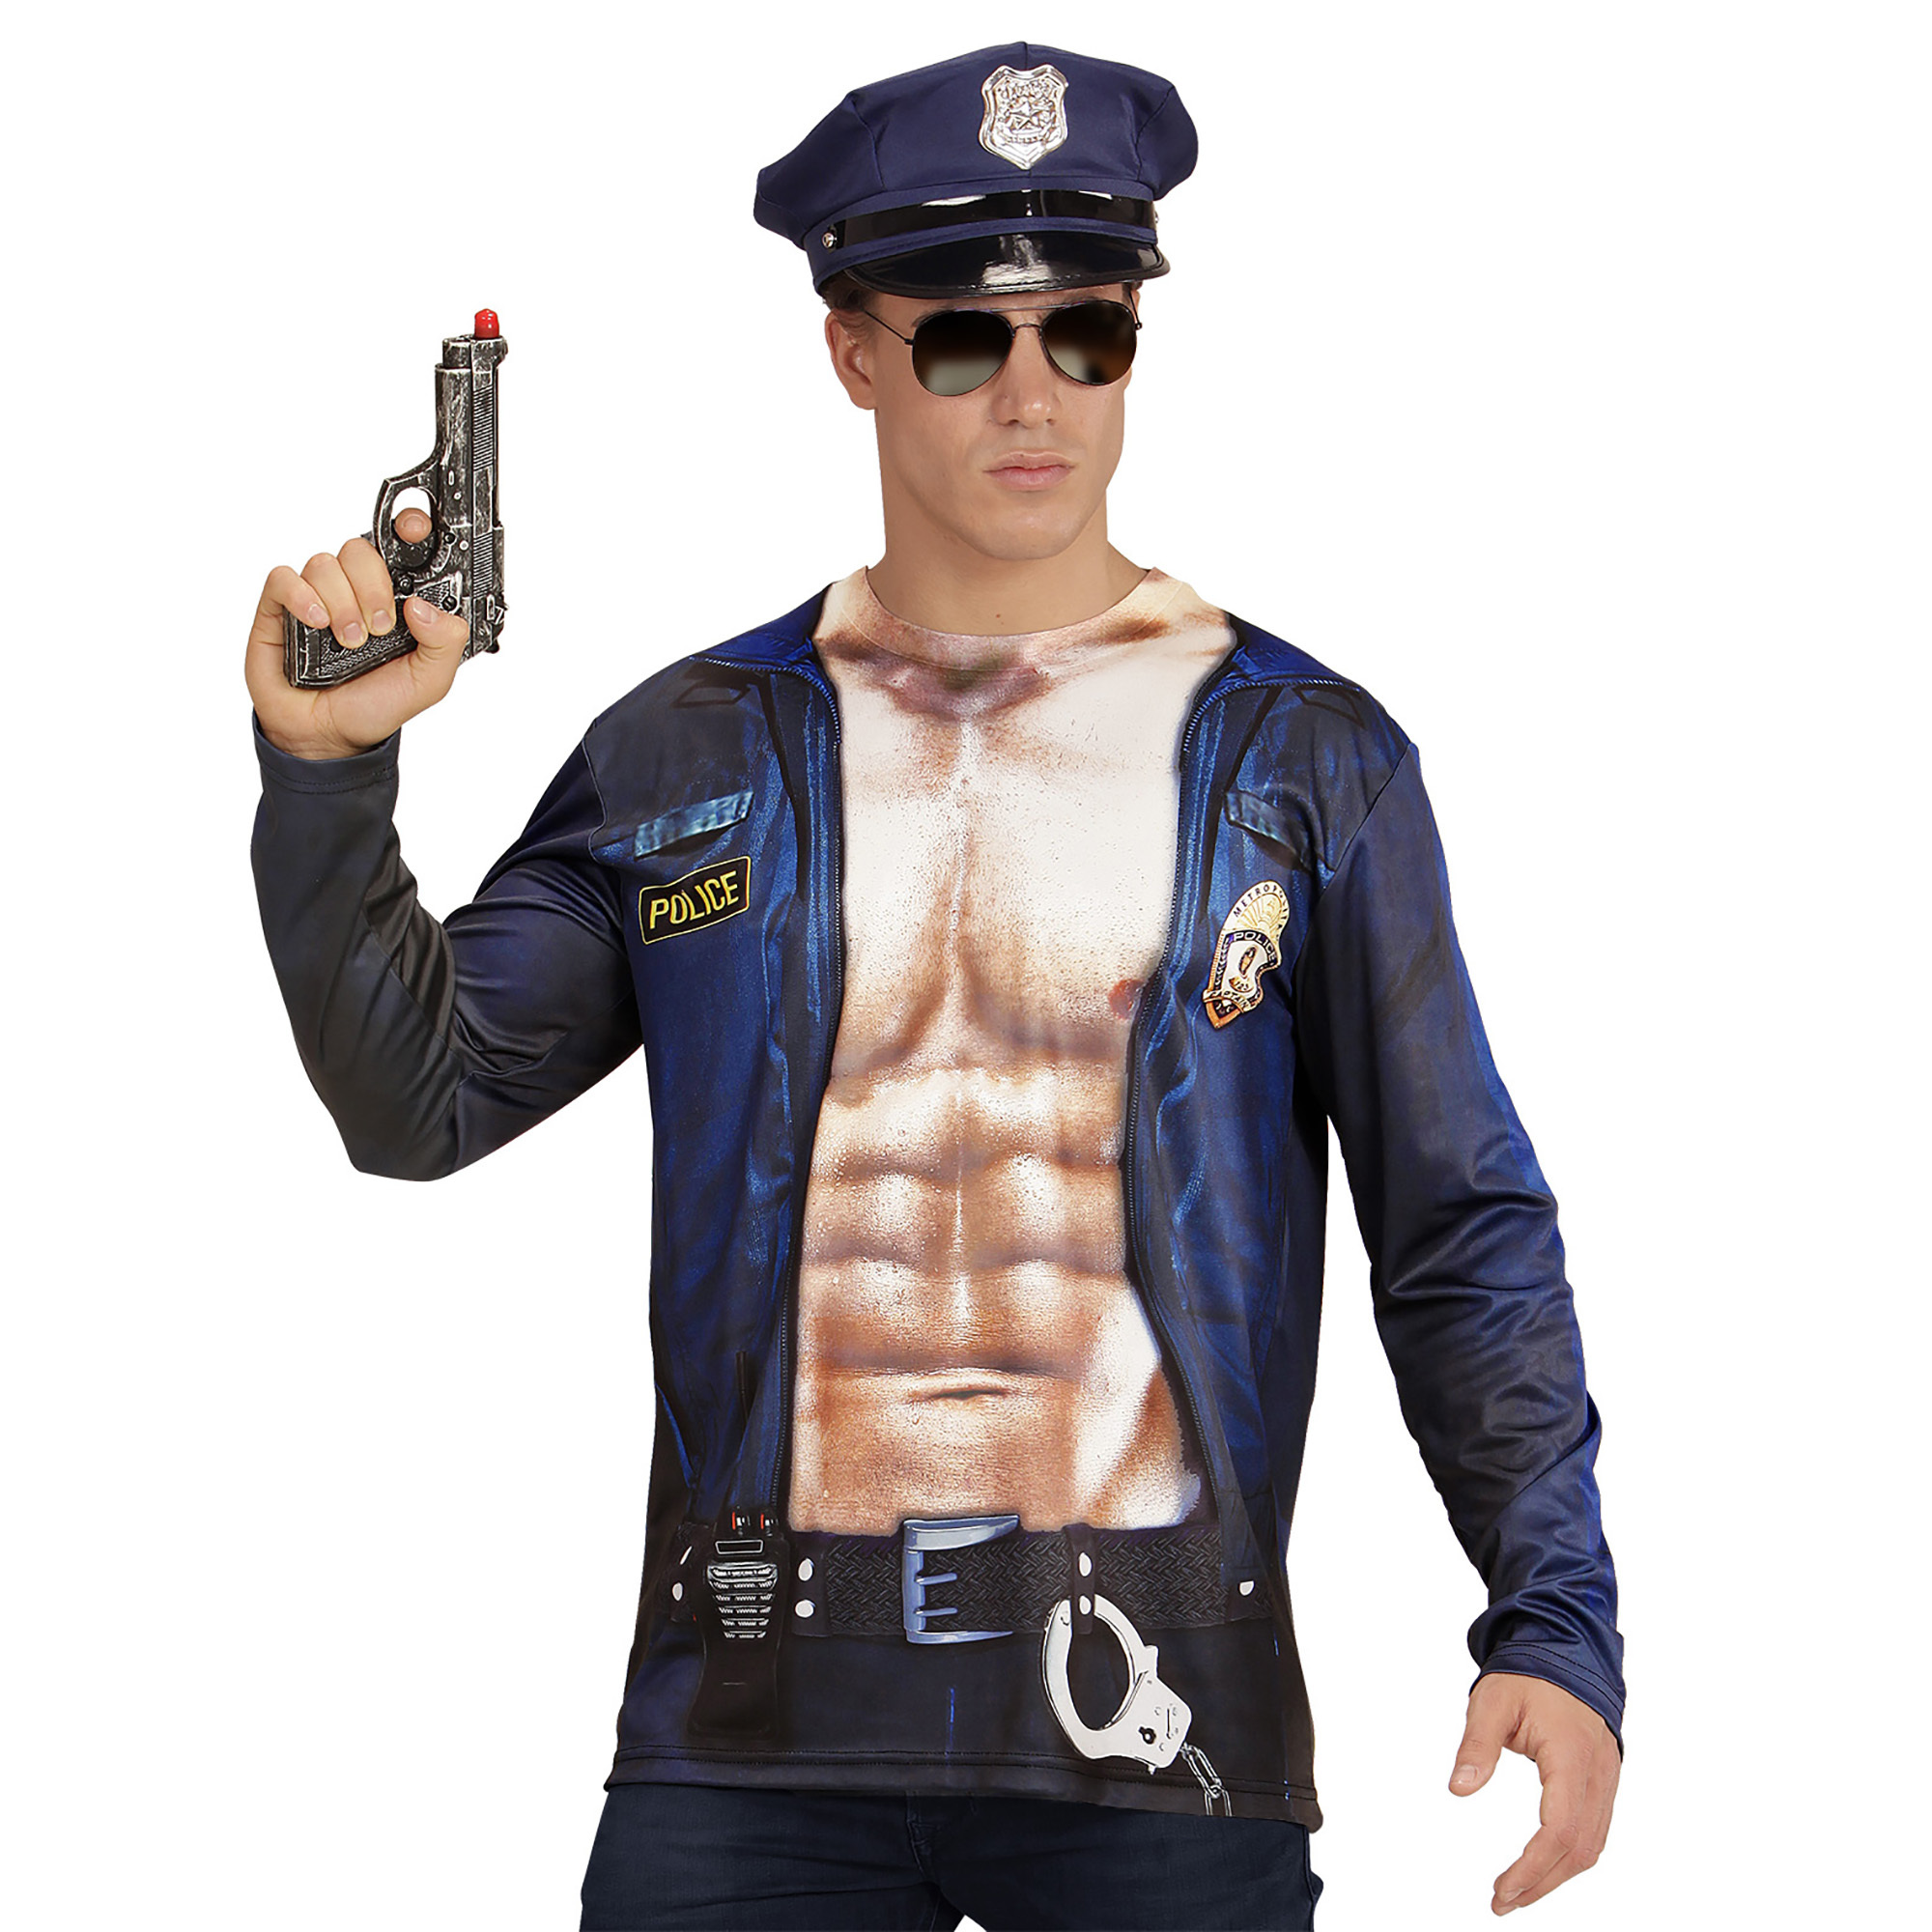 Politie man longsleeve foto realistisch volwassen